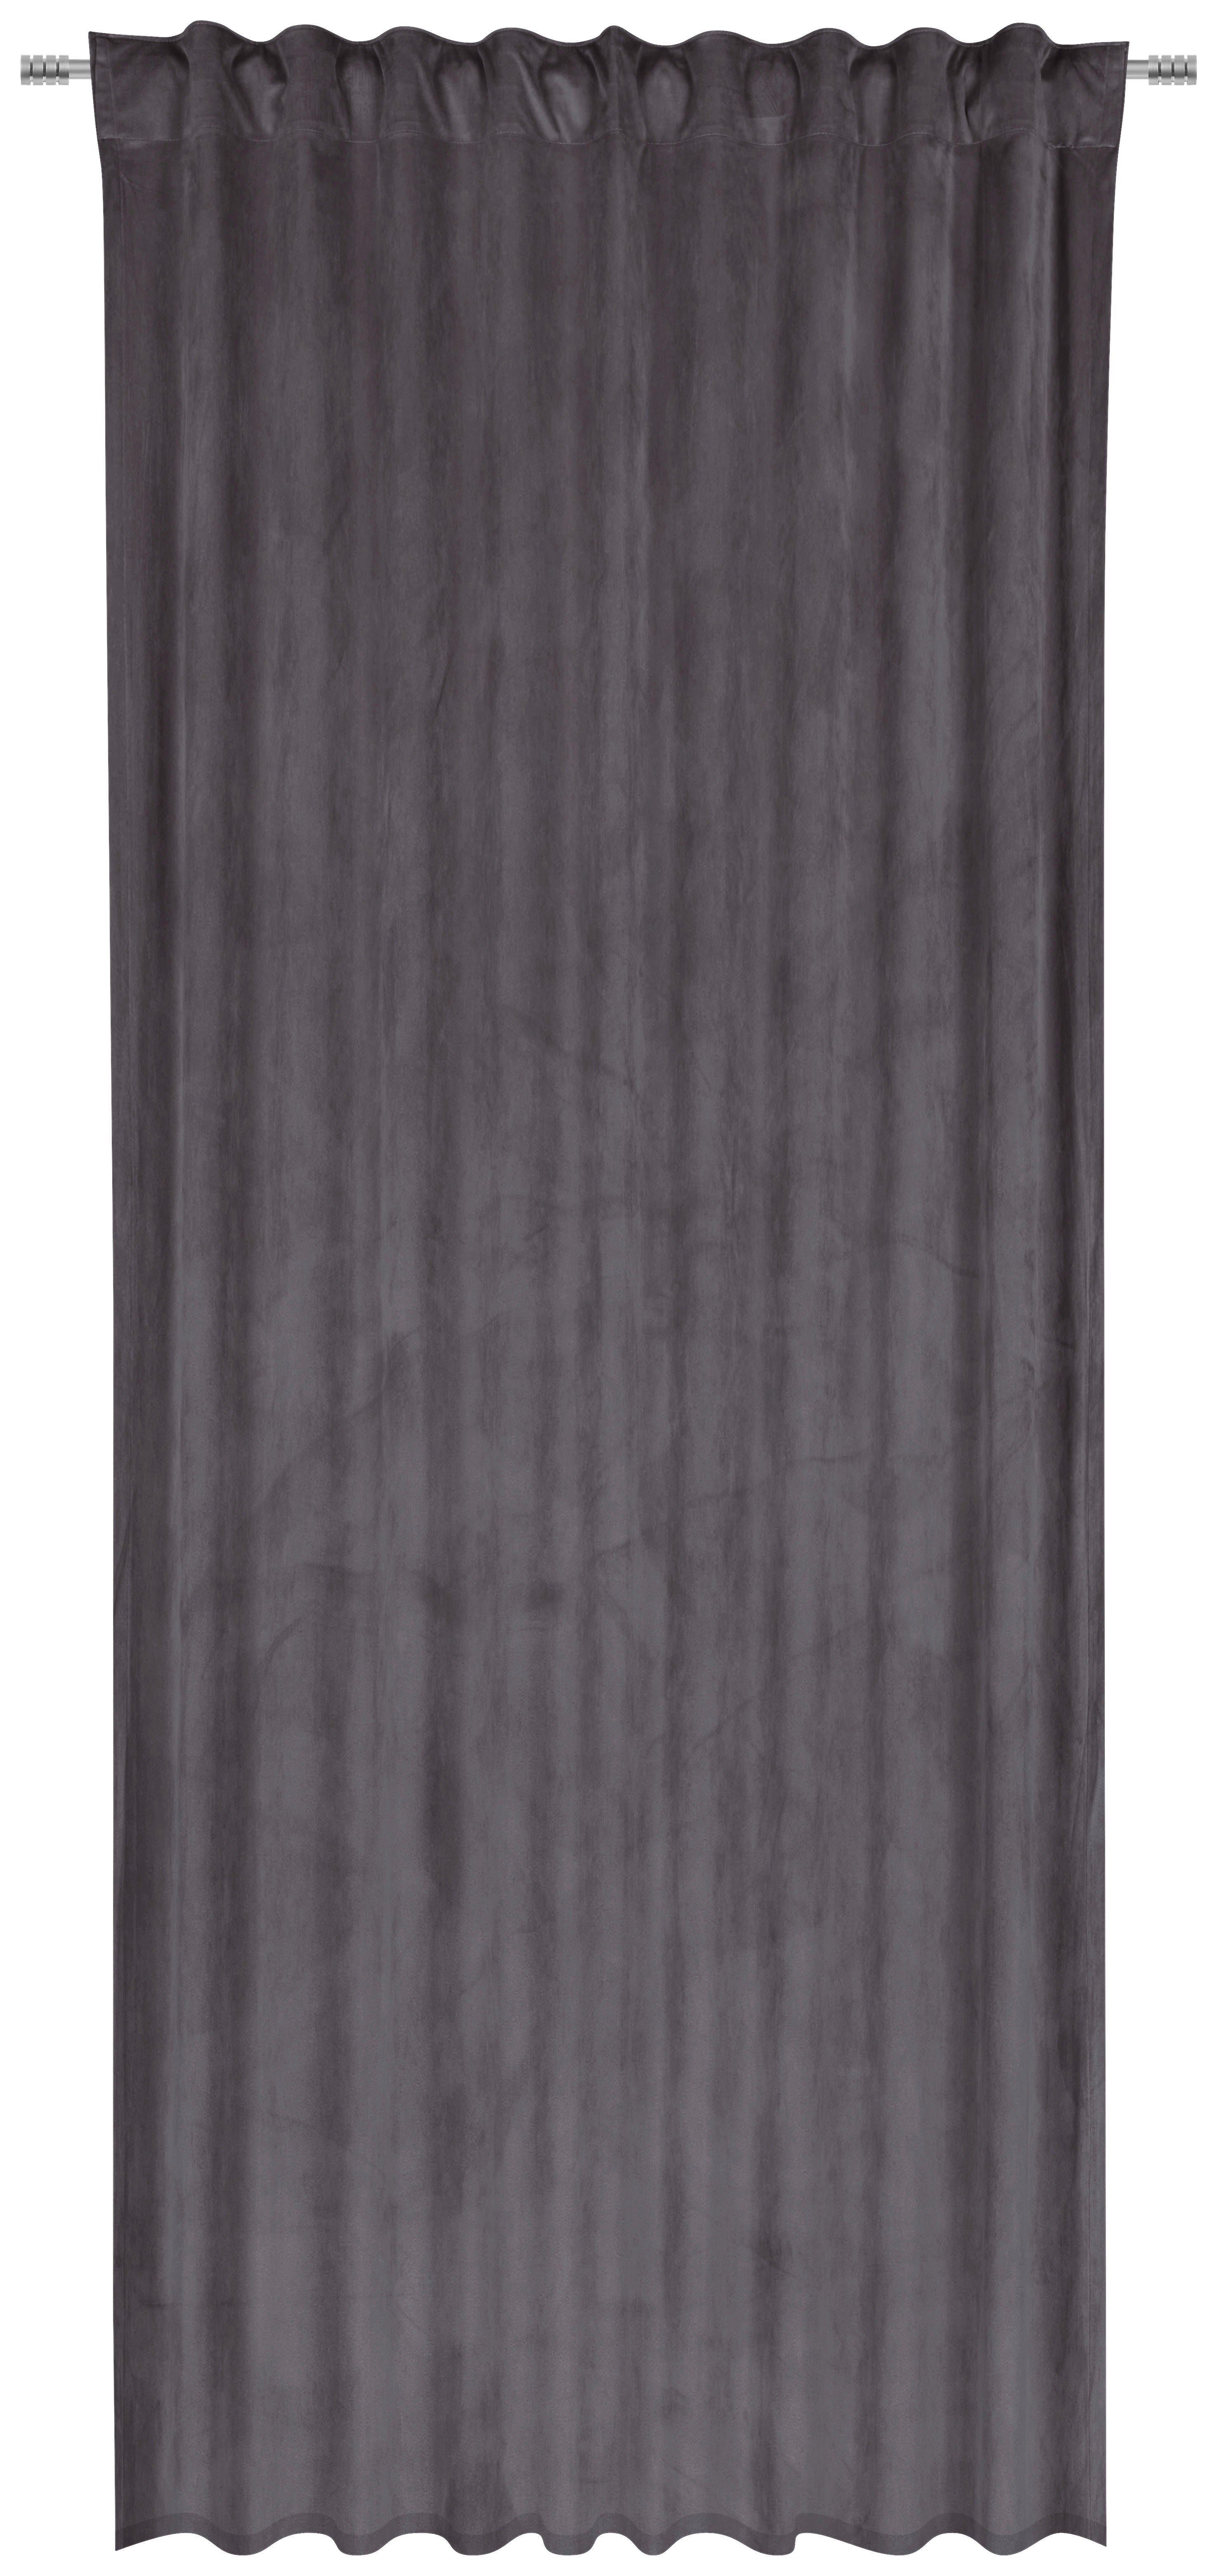 FERTIGVORHANG ZENATO blickdicht 135/245 cm   - Dunkelgrau, KONVENTIONELL, Textil (135/245cm) - Ambiente